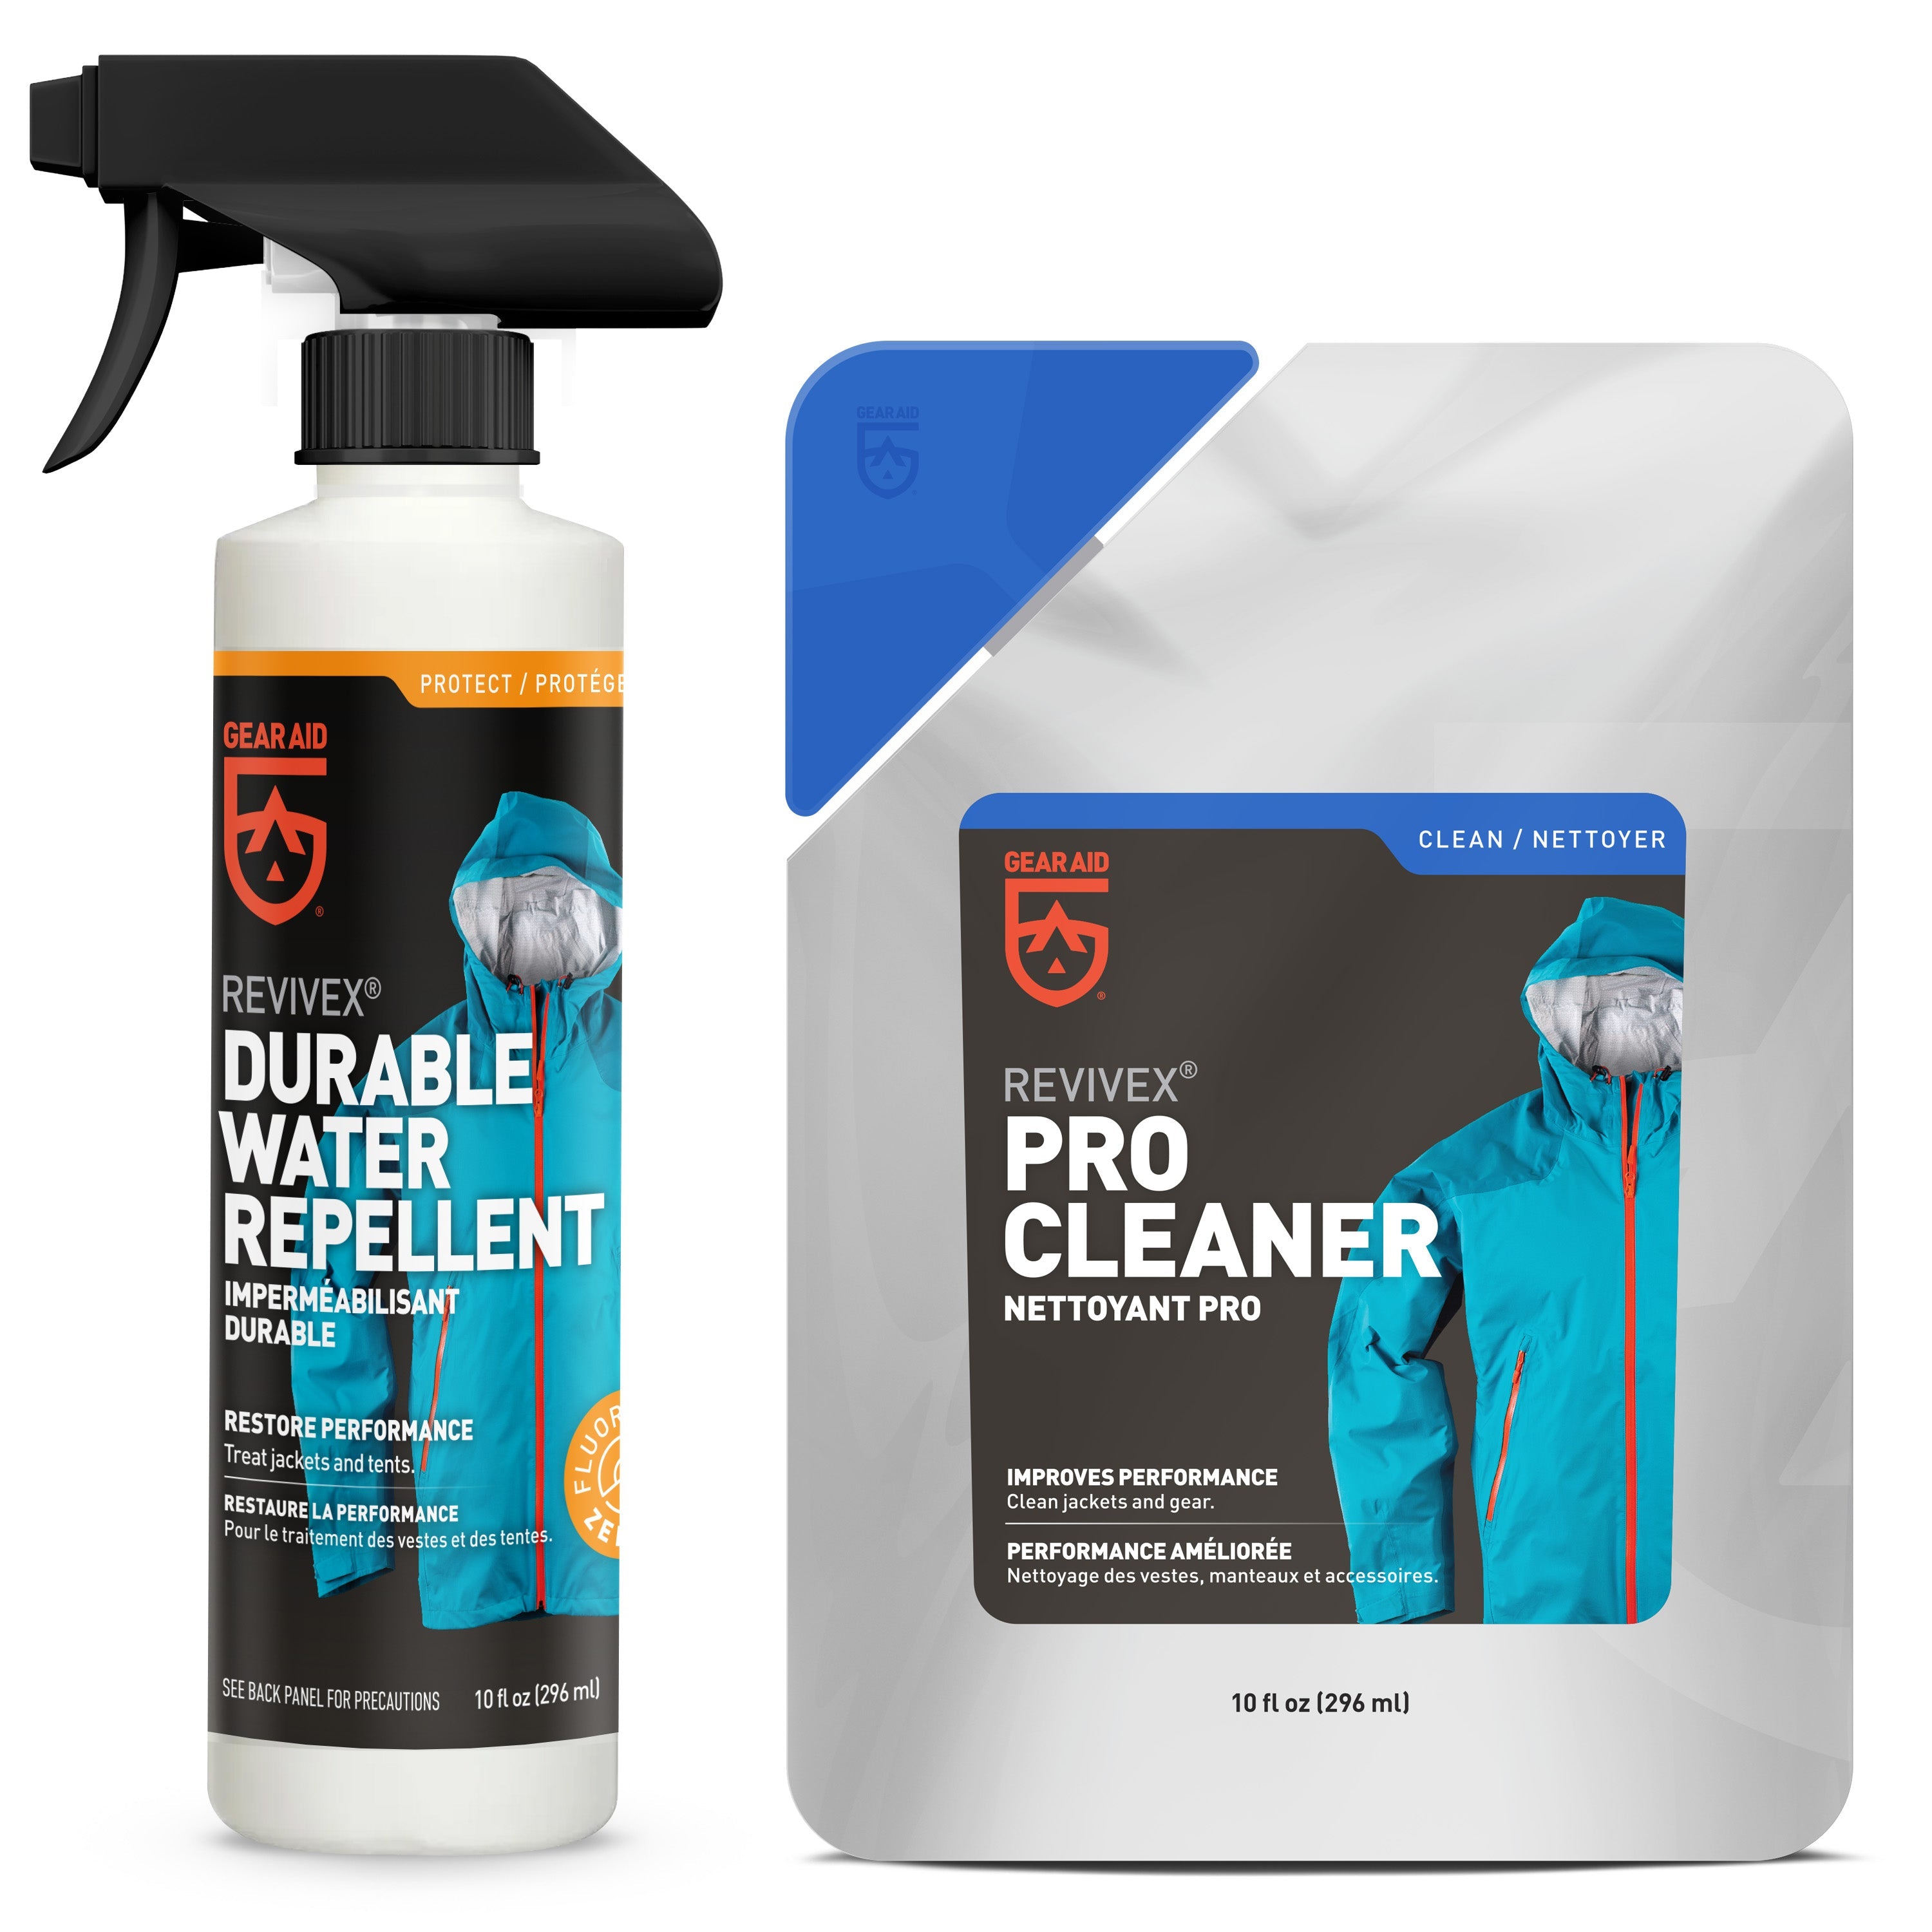 Revivex Durable Water Repellent 10 fl oz + Pro Cleaner 10 fl oz